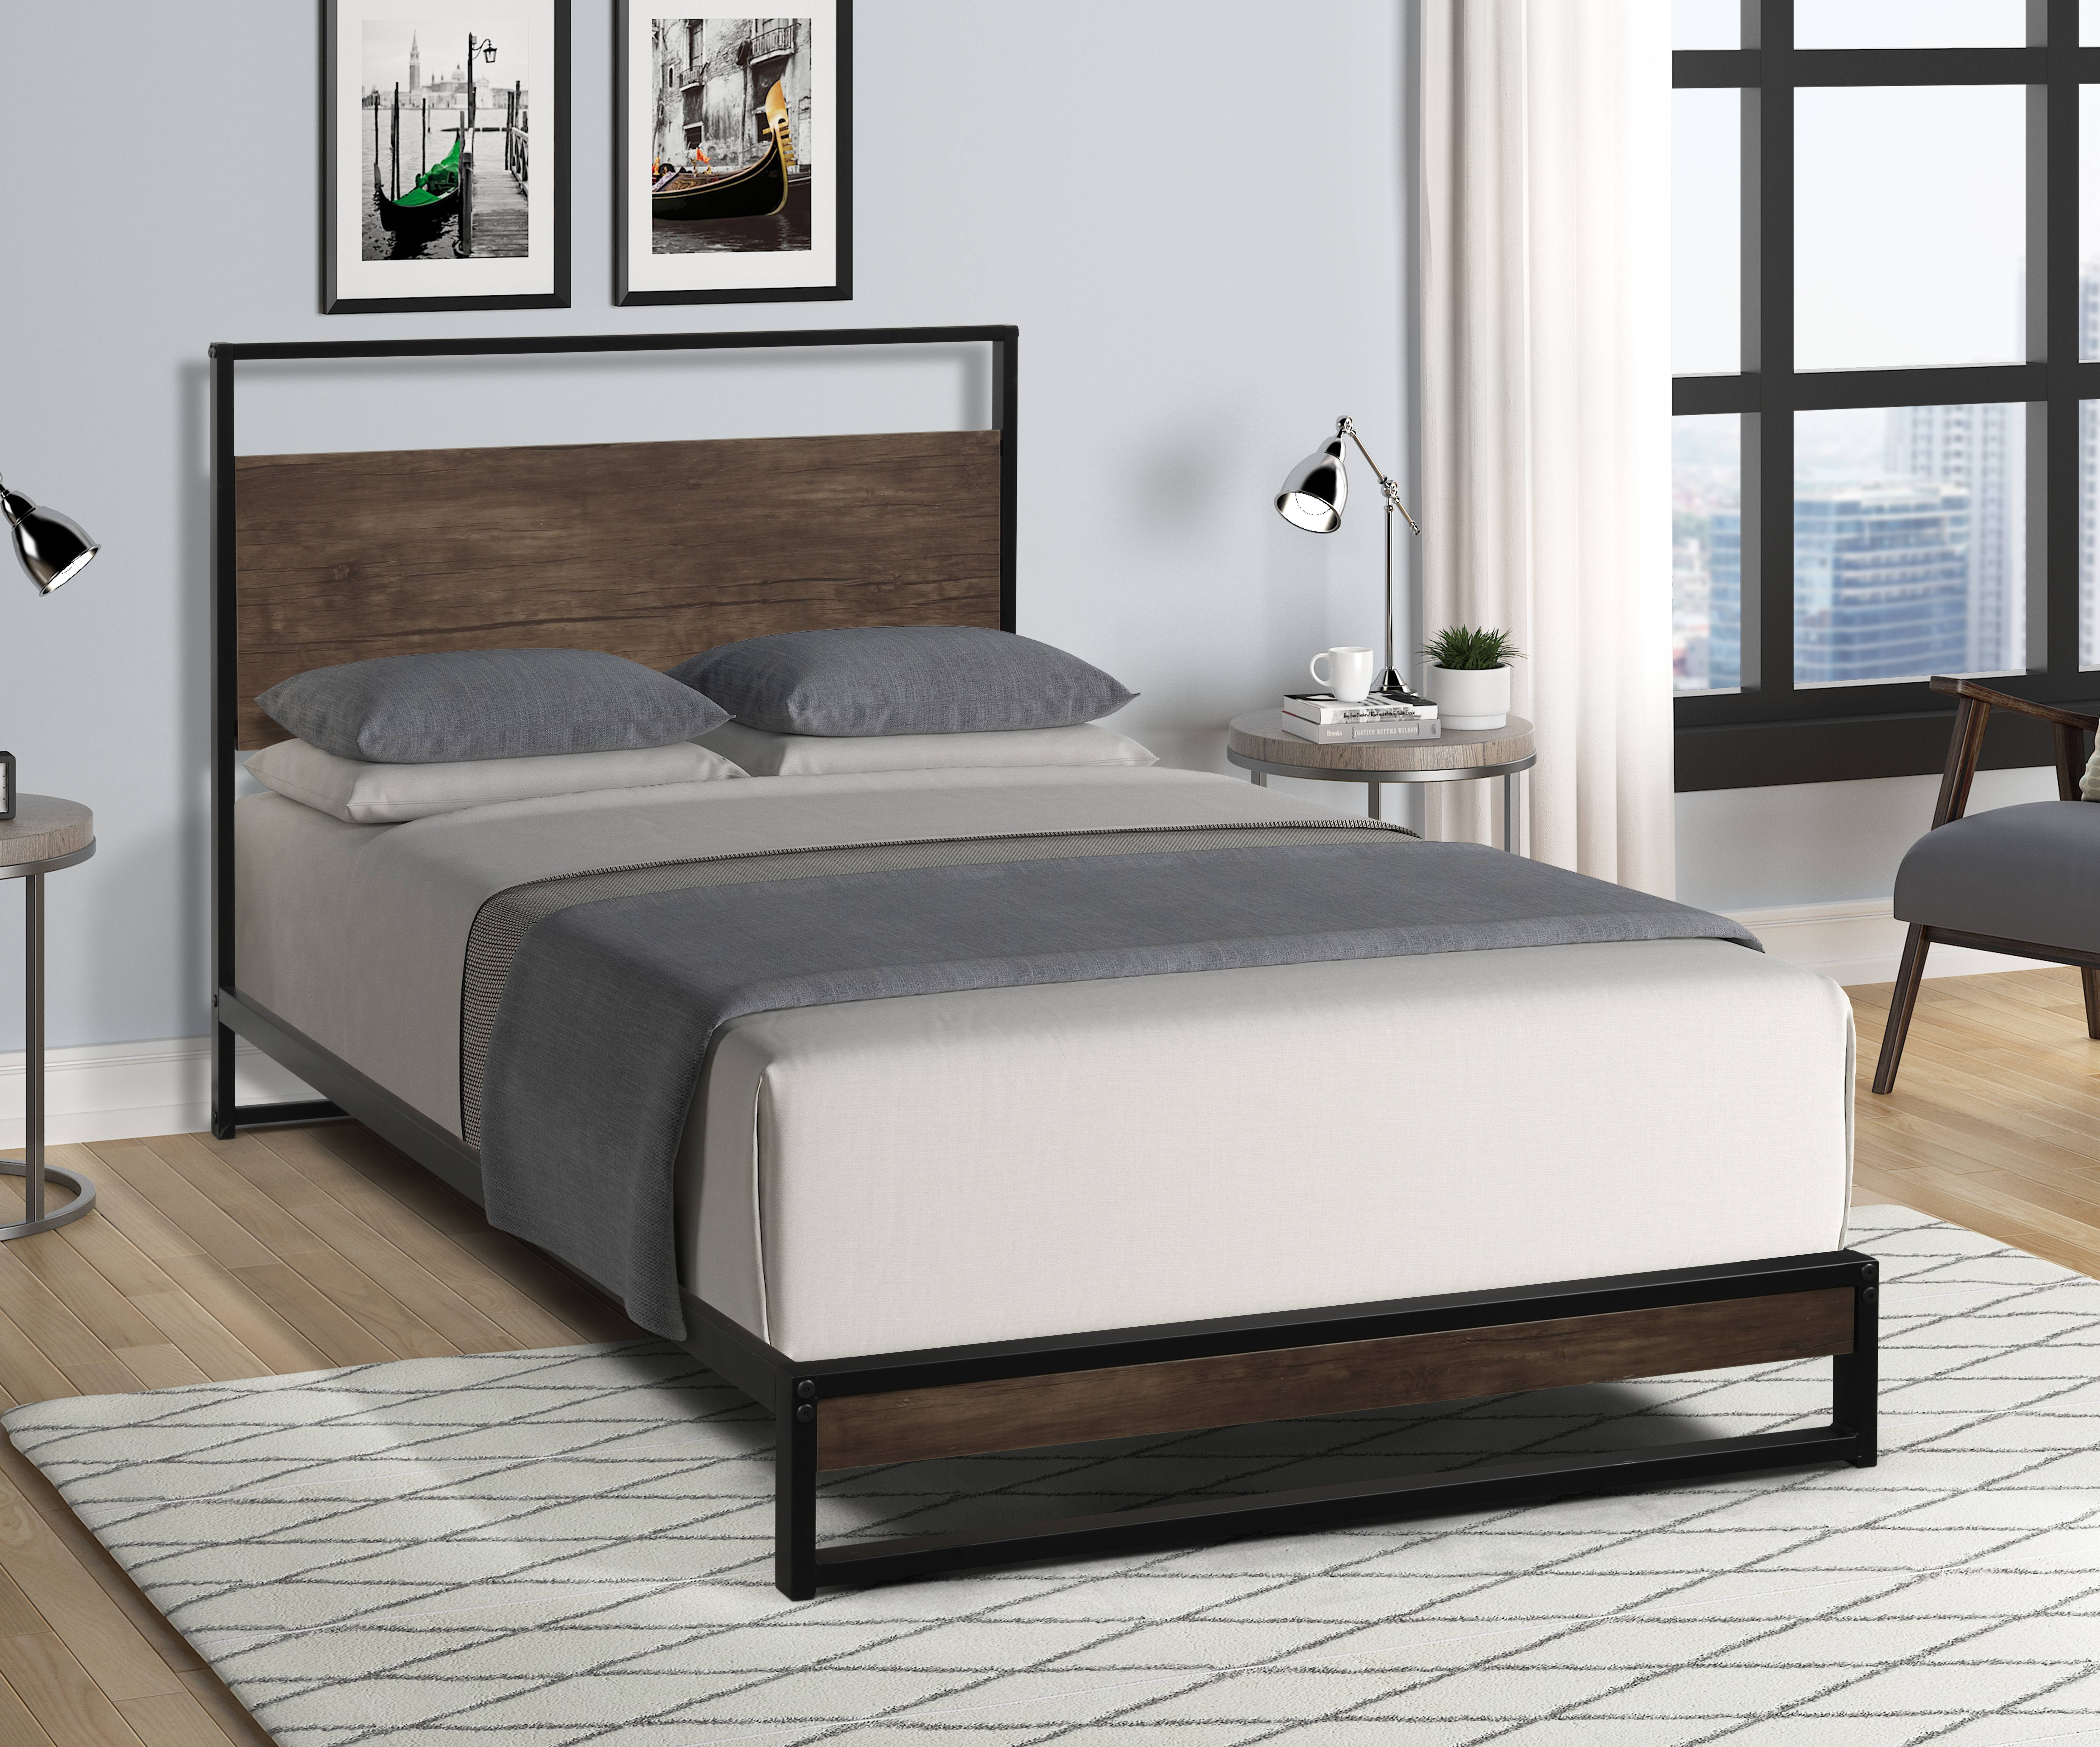 Bedframe Bedroom Furniture, Bed Board Twin